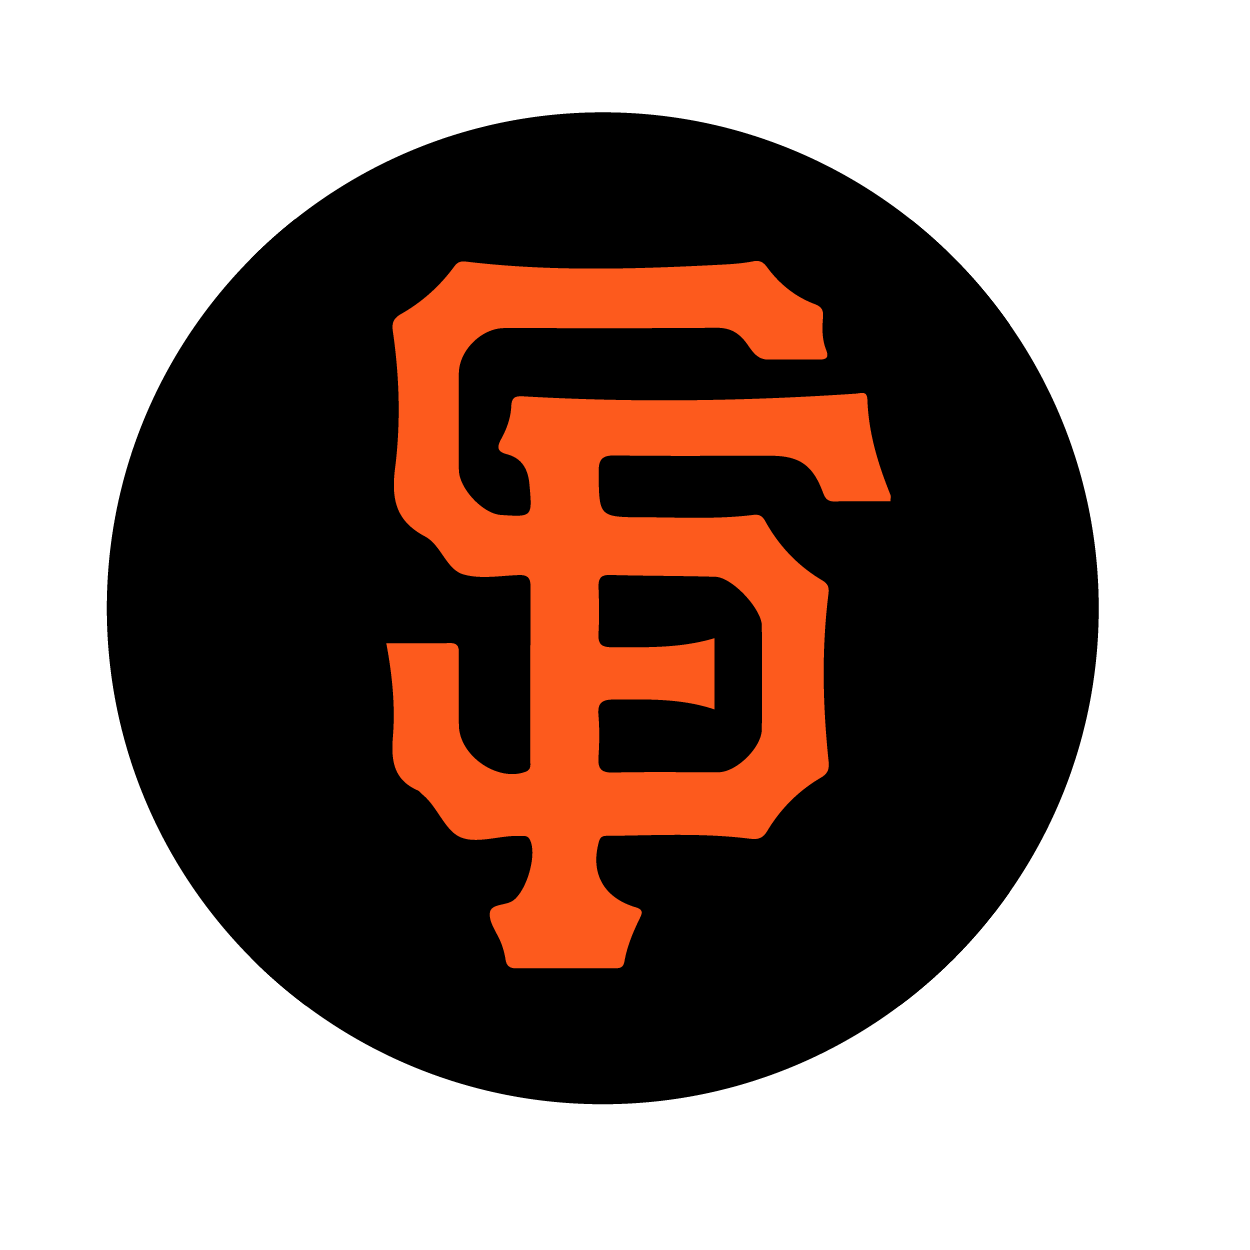 San Francisco Giants graphical representation